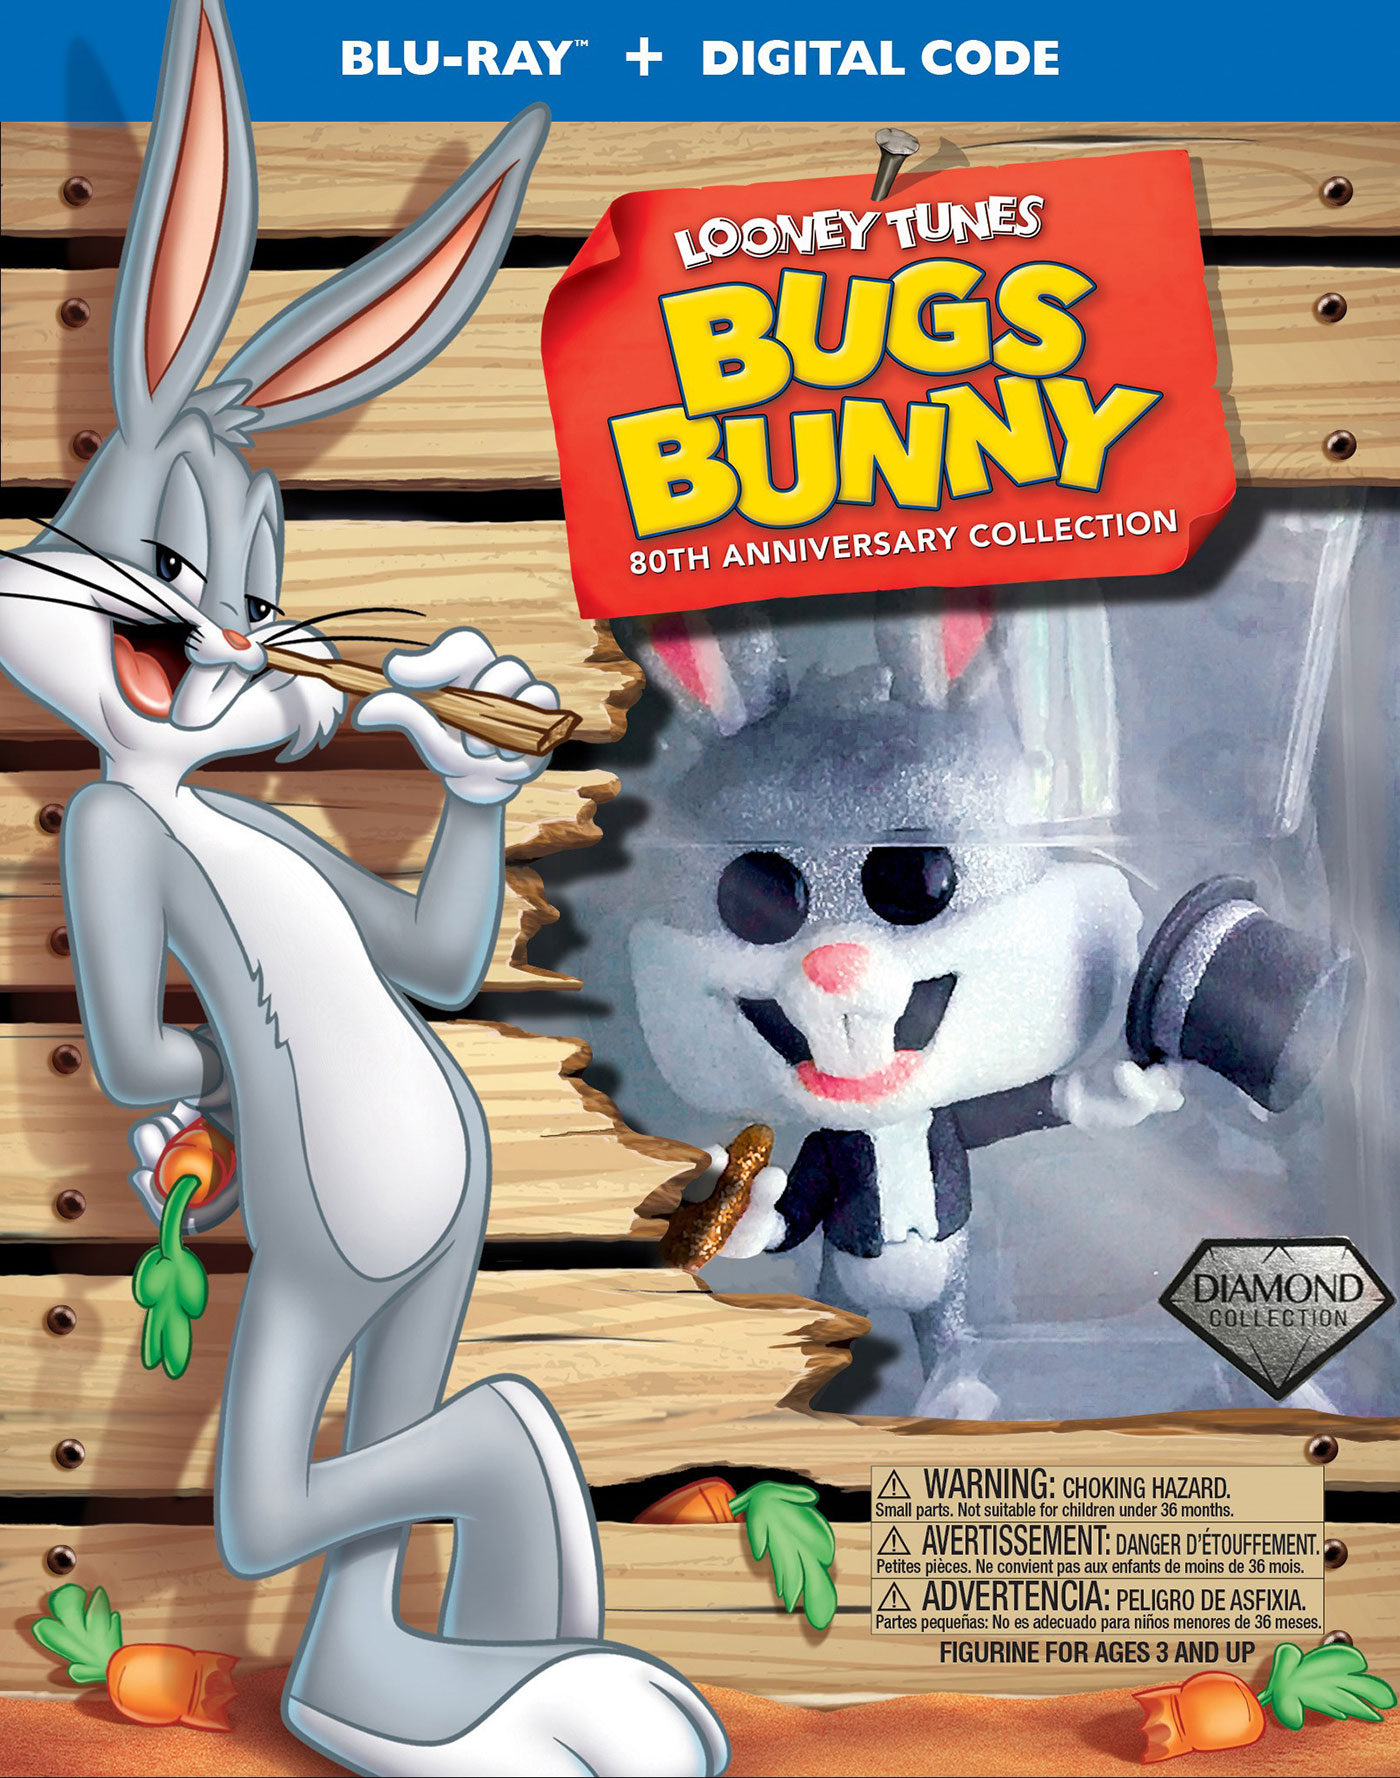 Bugs Bunny Blu-Ray